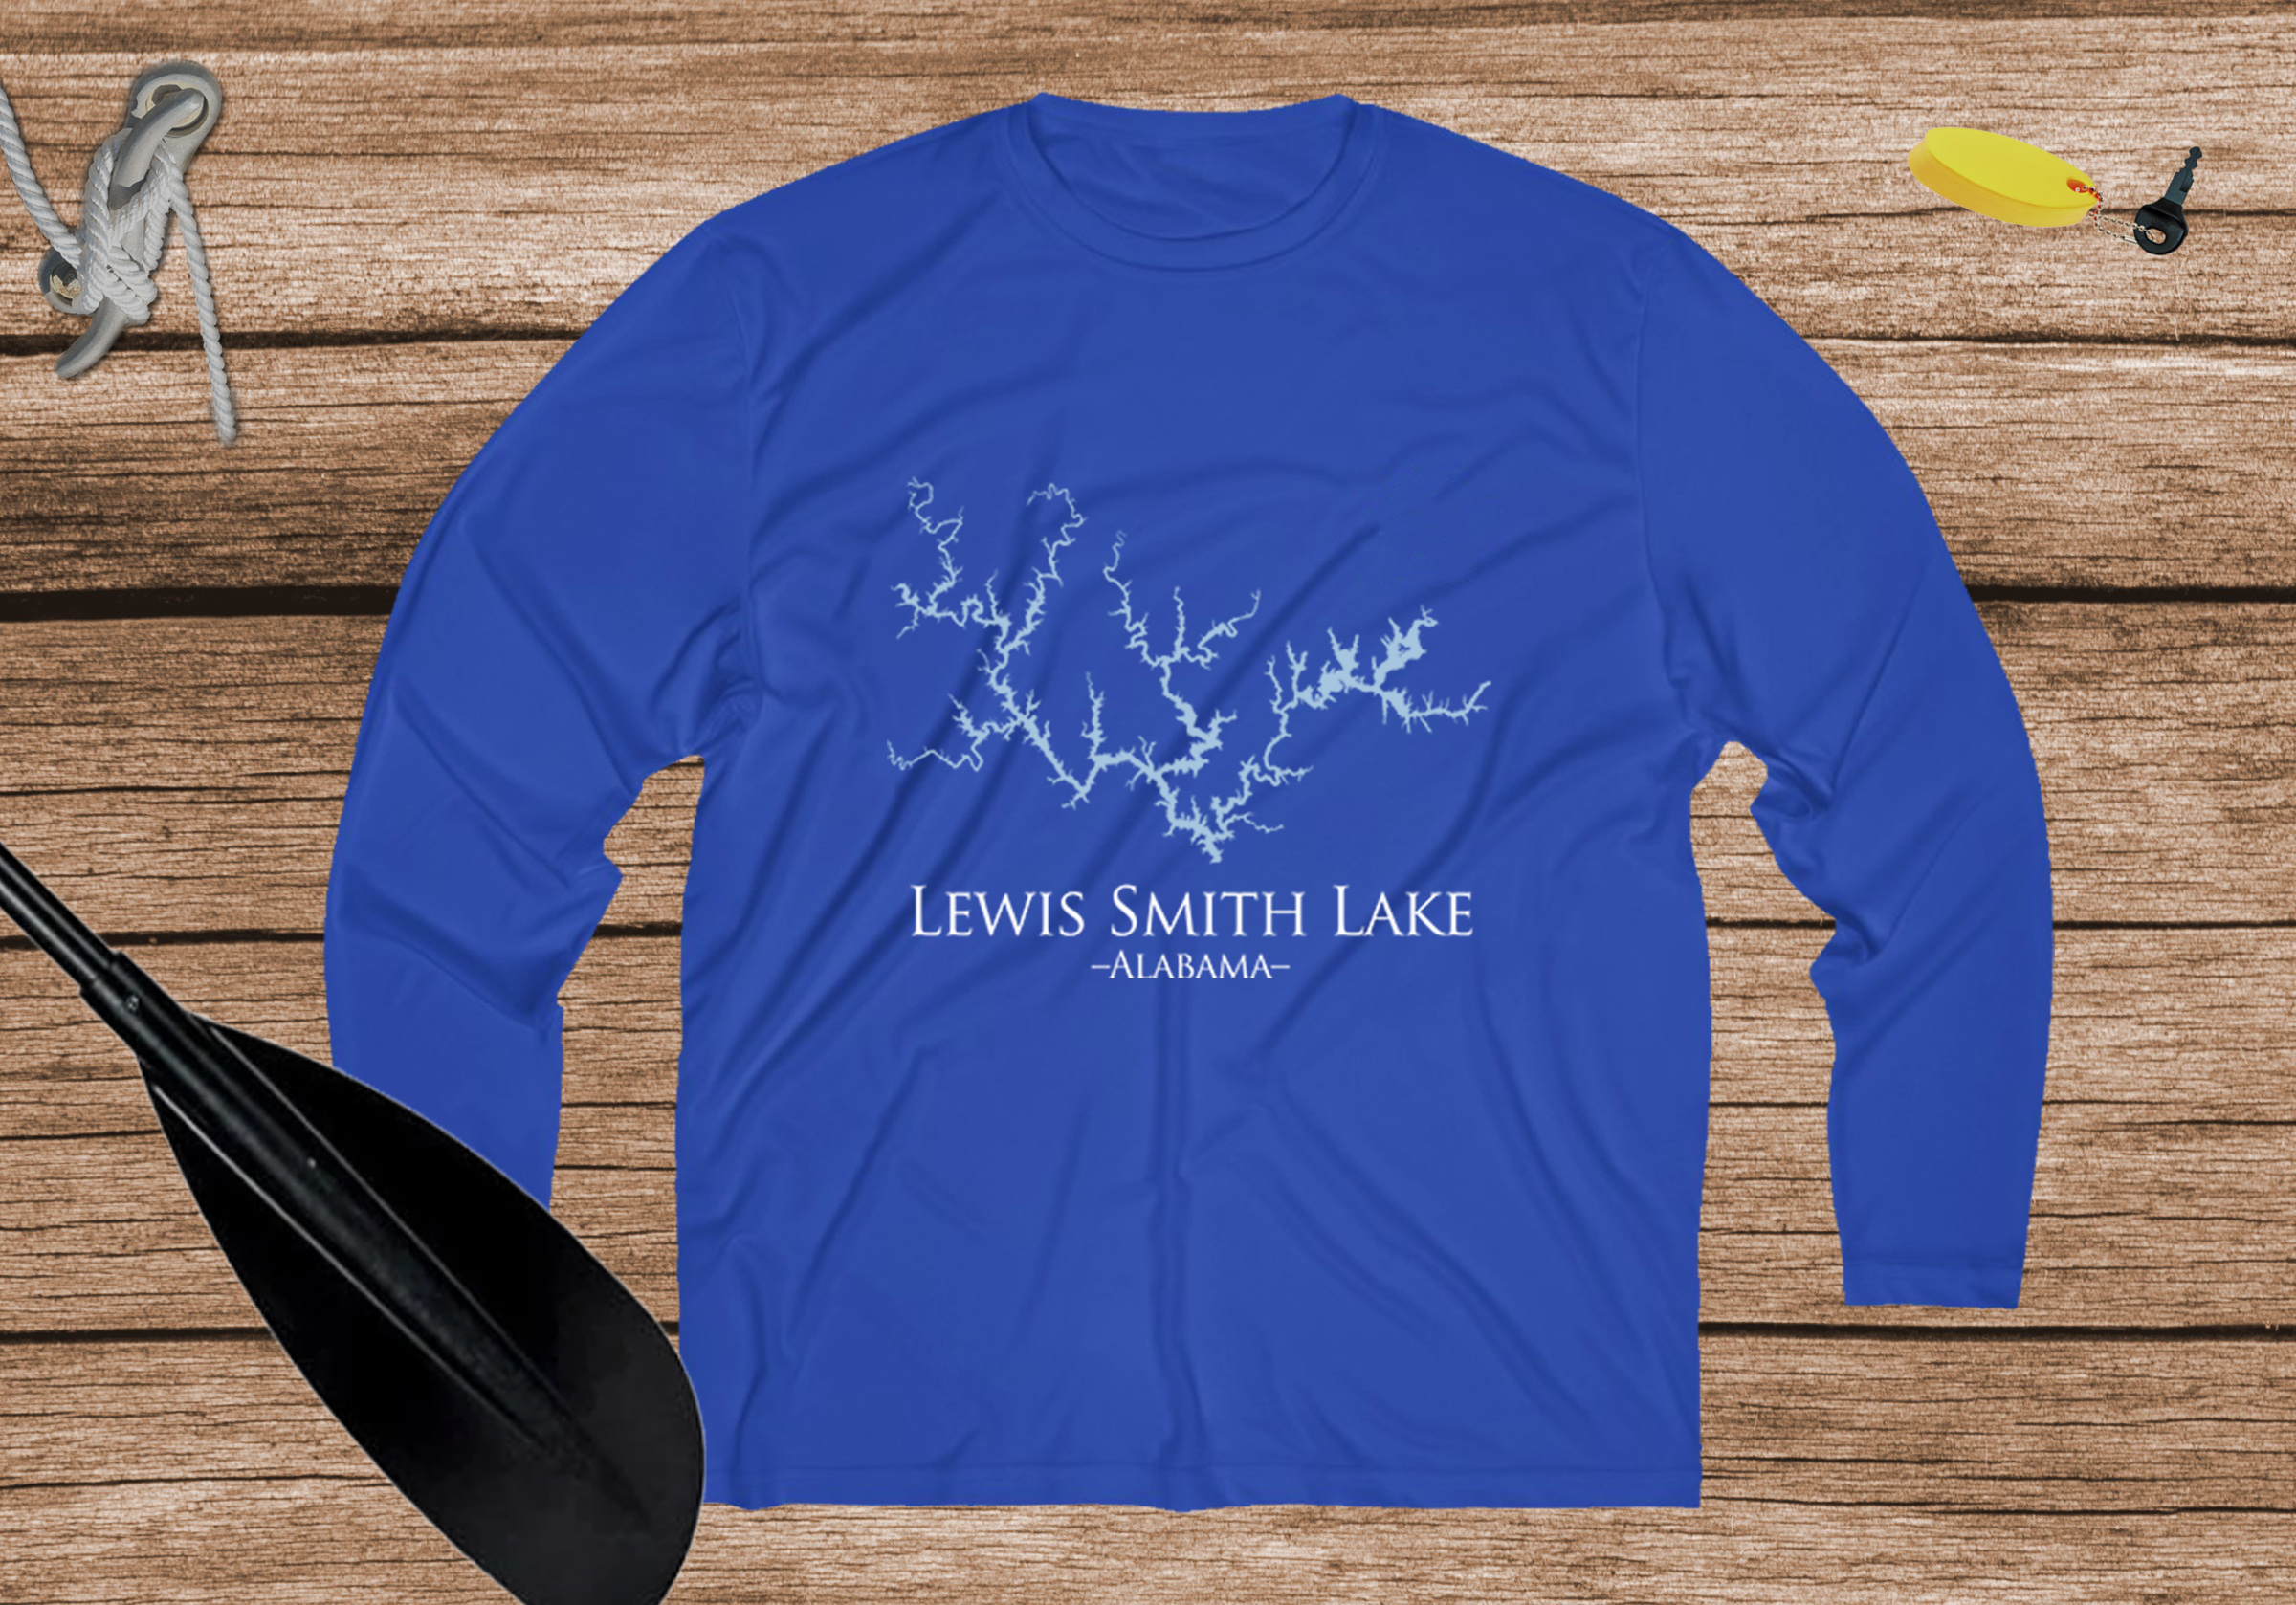 Lewis Smith Lake Dri-fit Boating Shirt - Breathable Material- Men's Long Sleeve Moisture Wicking Tee - Alabama Lake